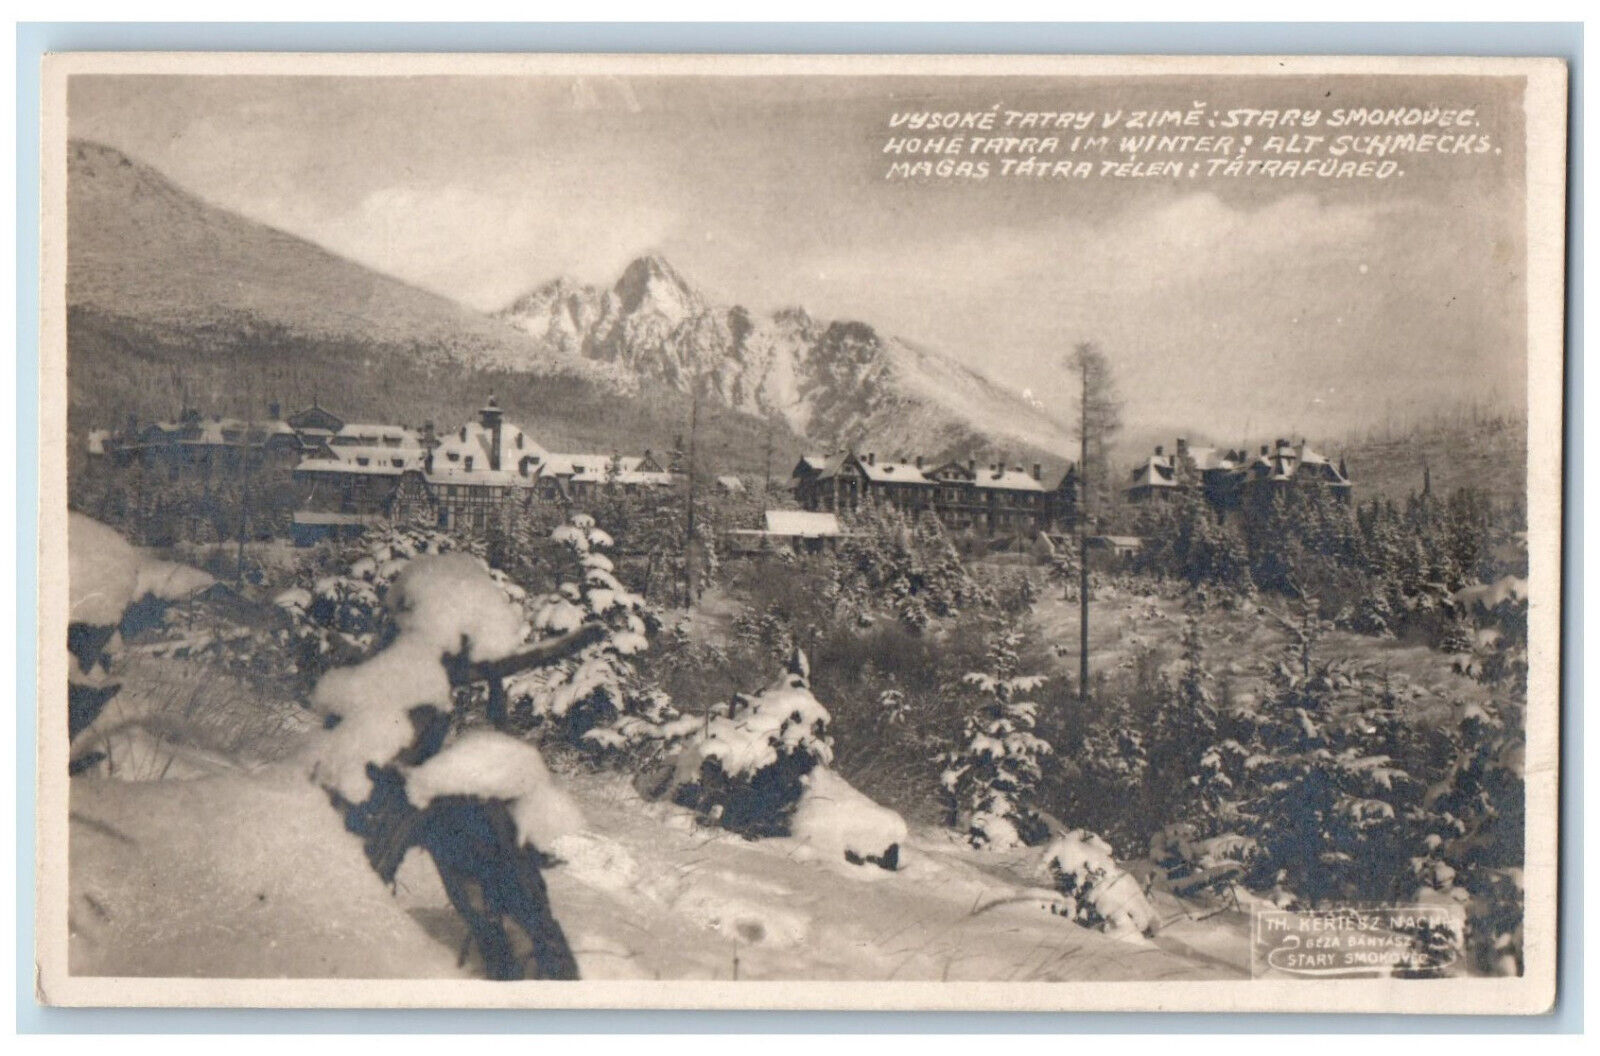 Stary Smokovec Slovakia Postcard High Tatras In Winter c1920's RPPC Photo